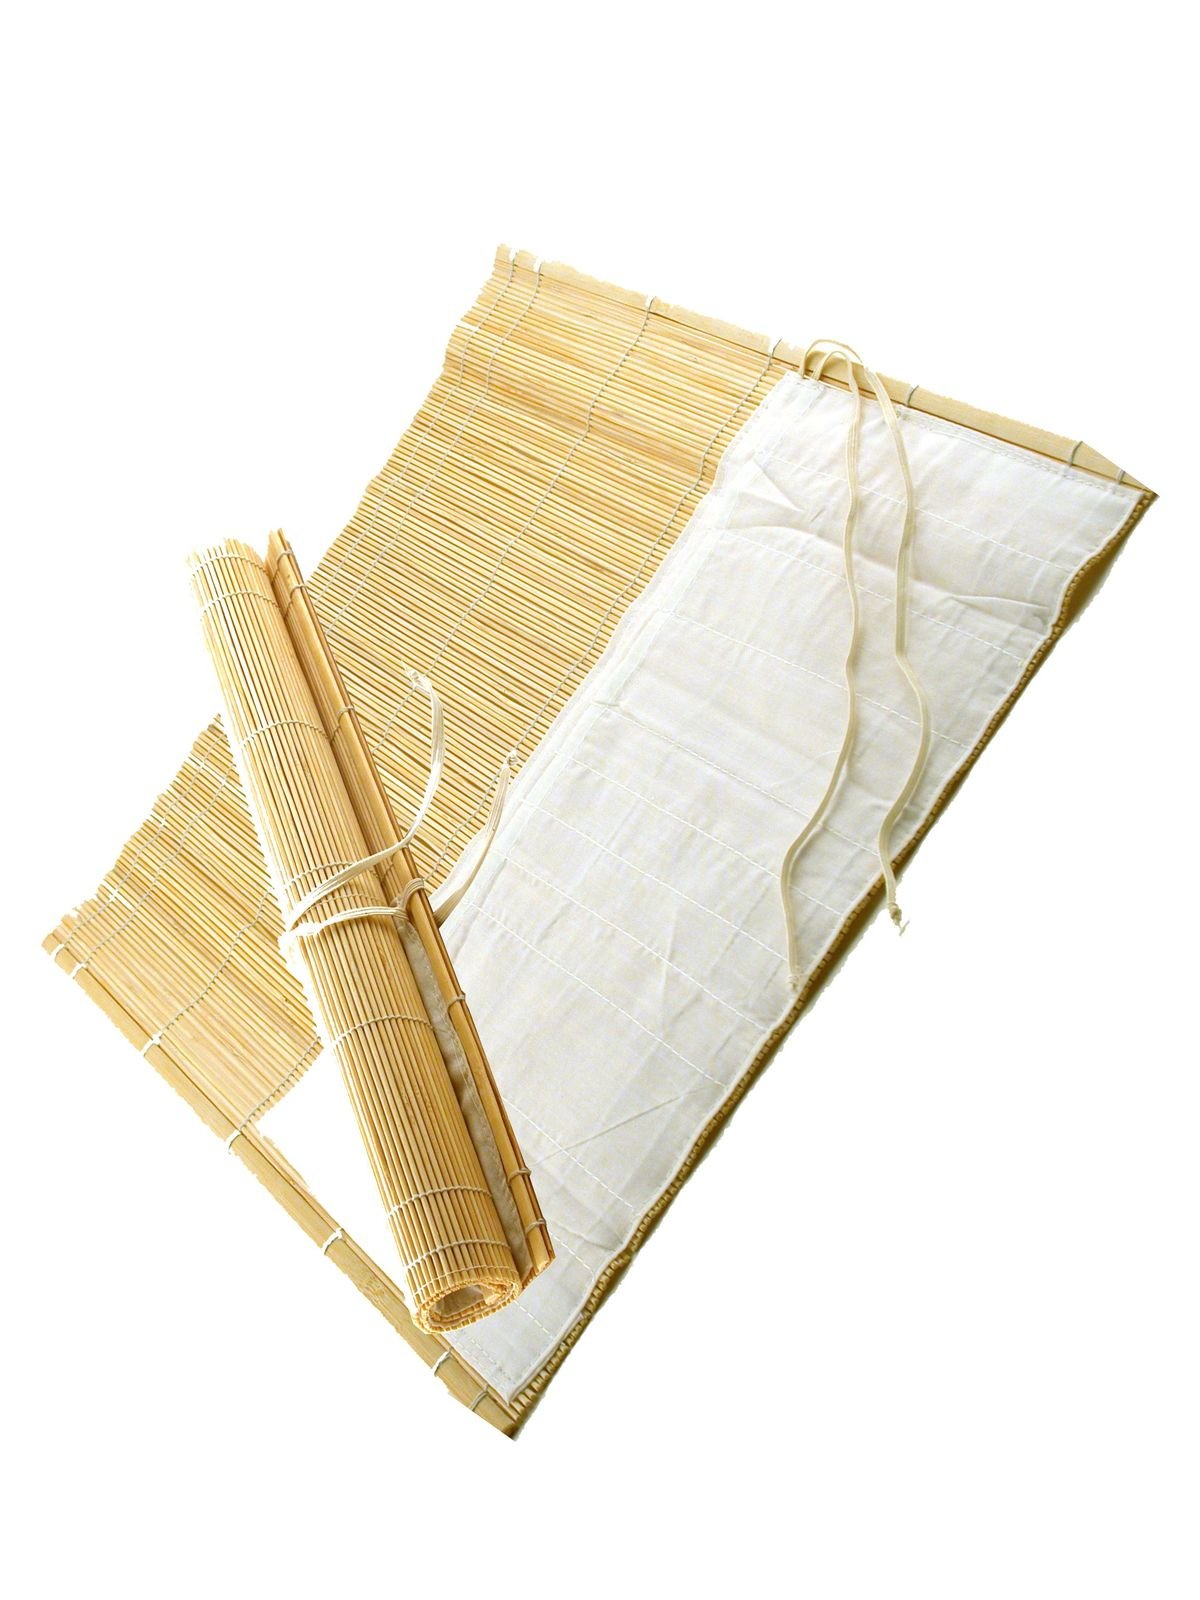 Jack Richeson - Bamboo Brush Mat